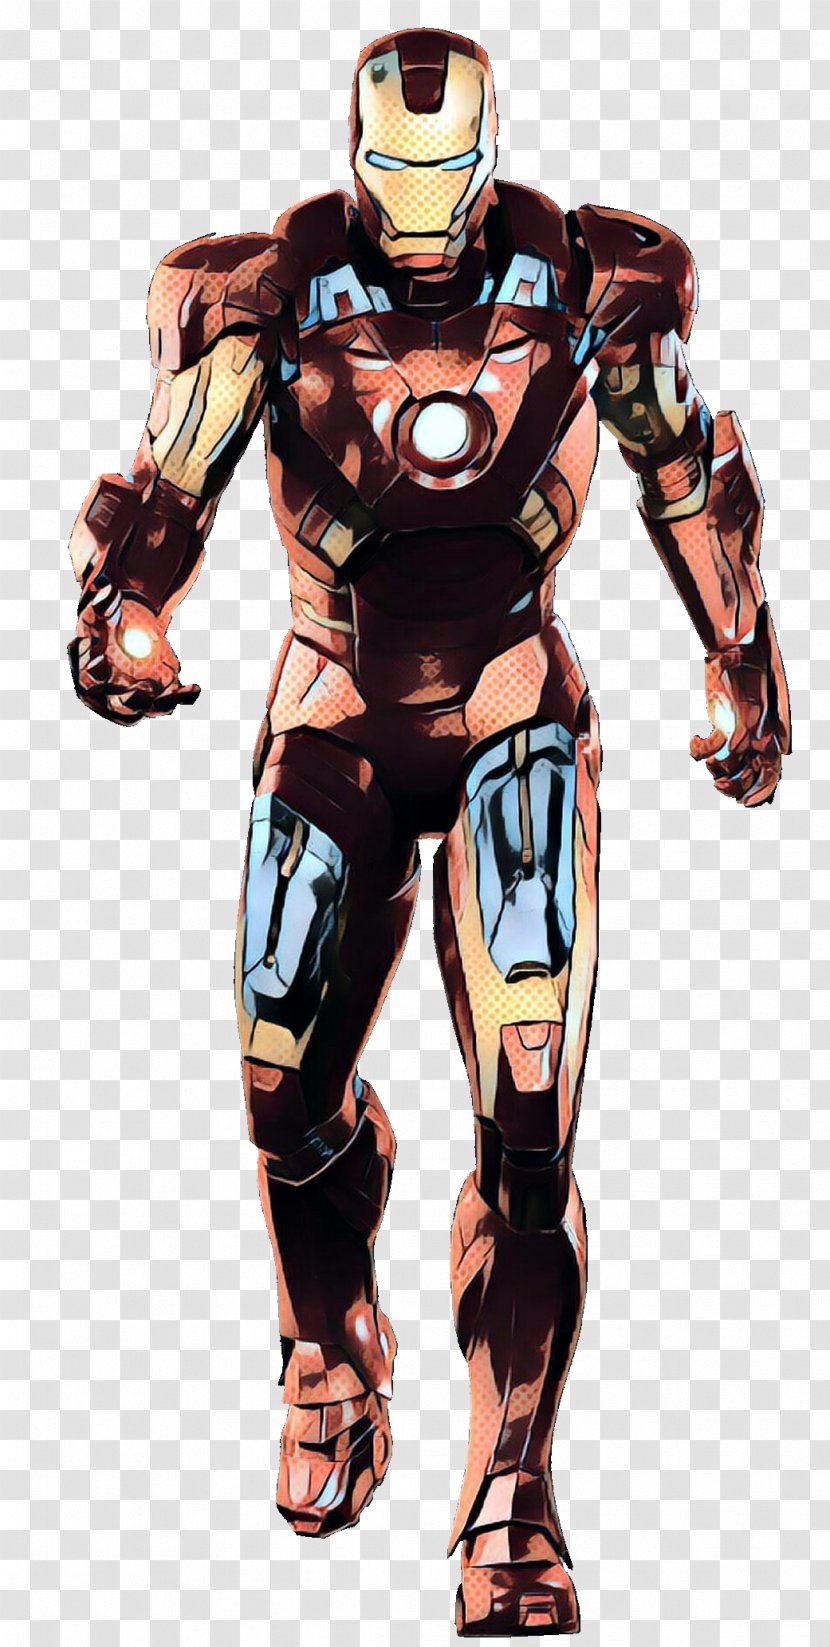 Iron Man's Armor Portable Network Graphics Marvel Cinematic Universe Image - Comics - Man 3 Transparent PNG